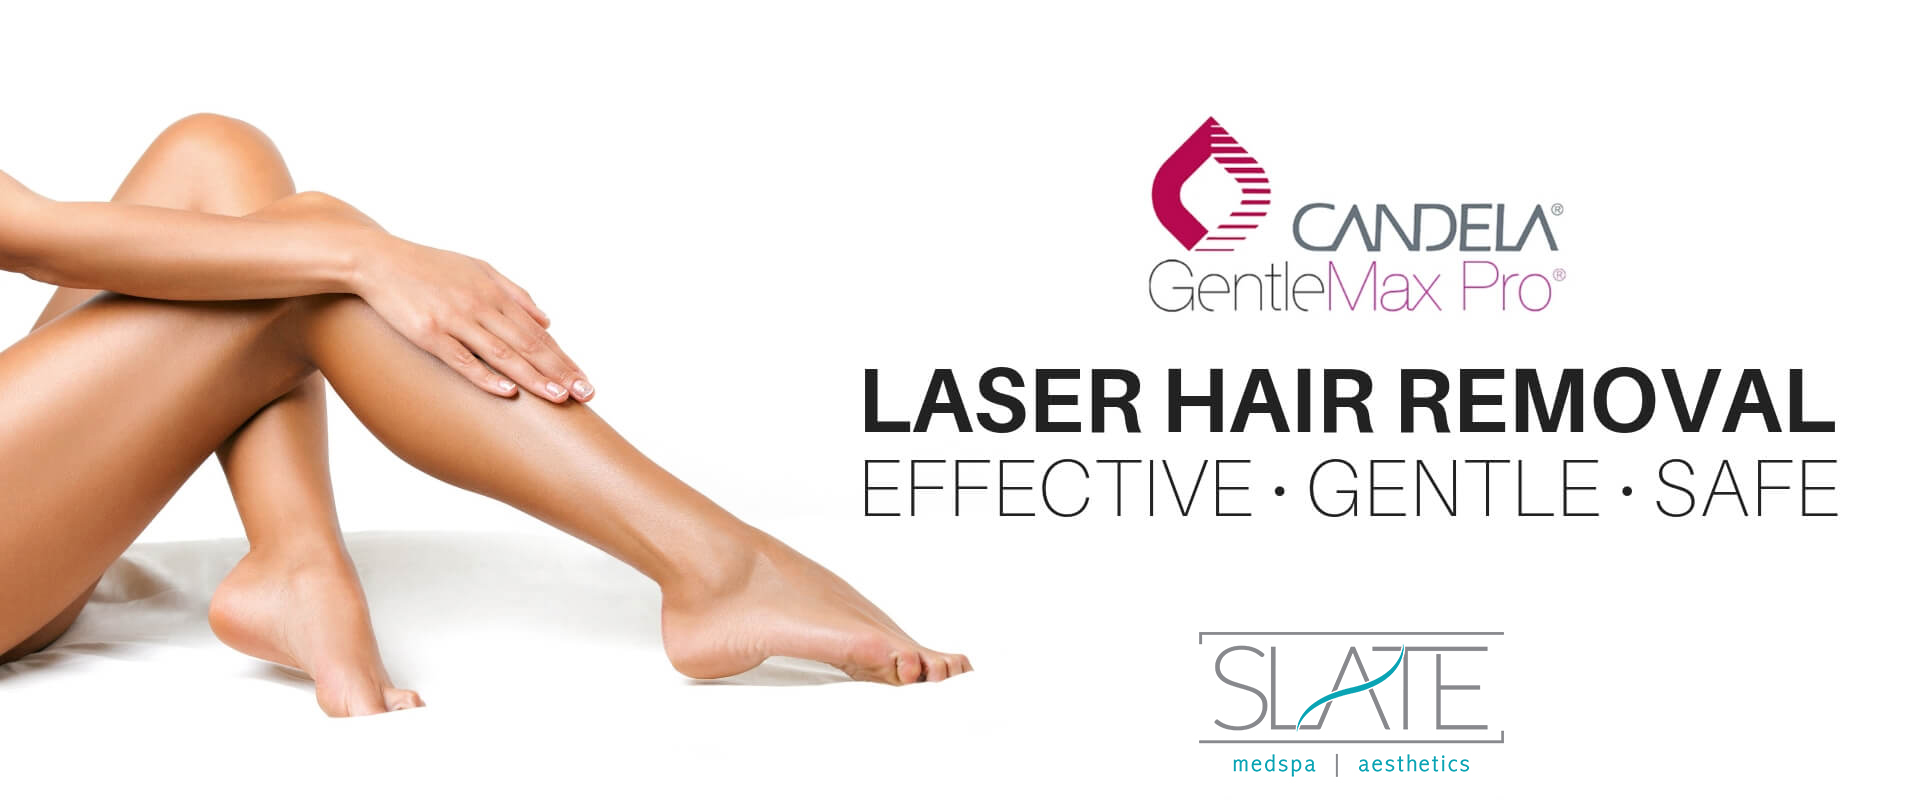 Slate Medspa a premier laser hair removal provider